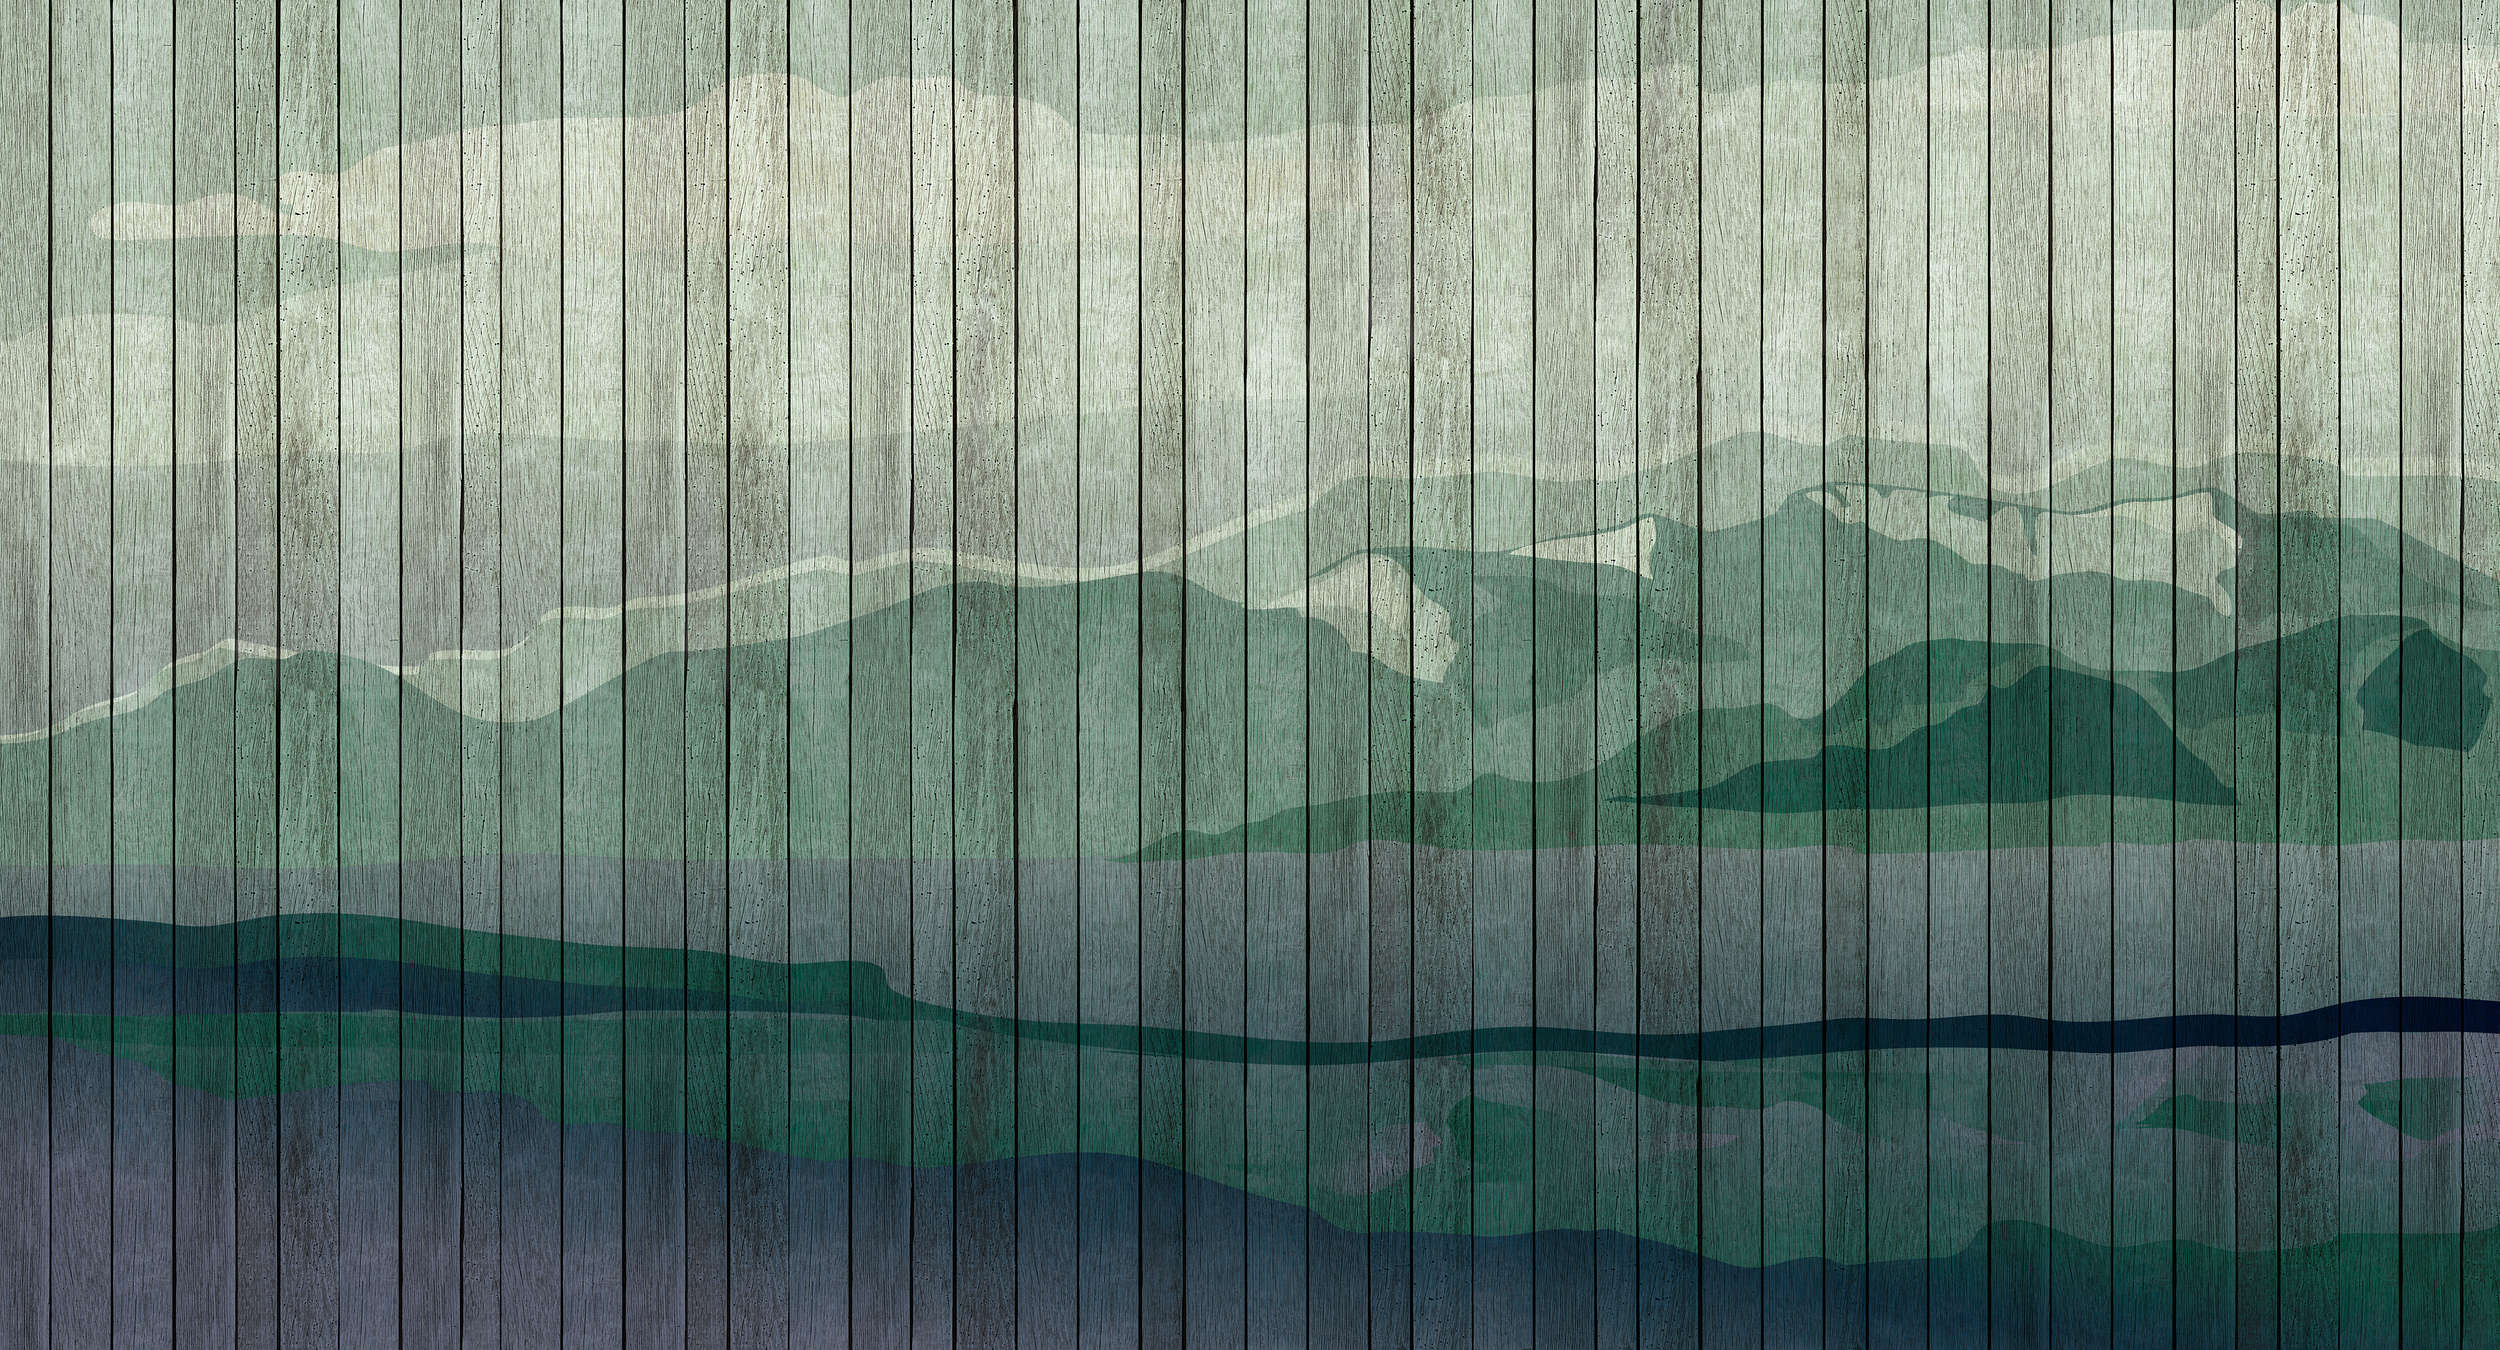             Mountains 3 - Moderne Fototapete Berglandschaft & Bretteroptik – Blau, Grün | Mattes Glattvlies
        